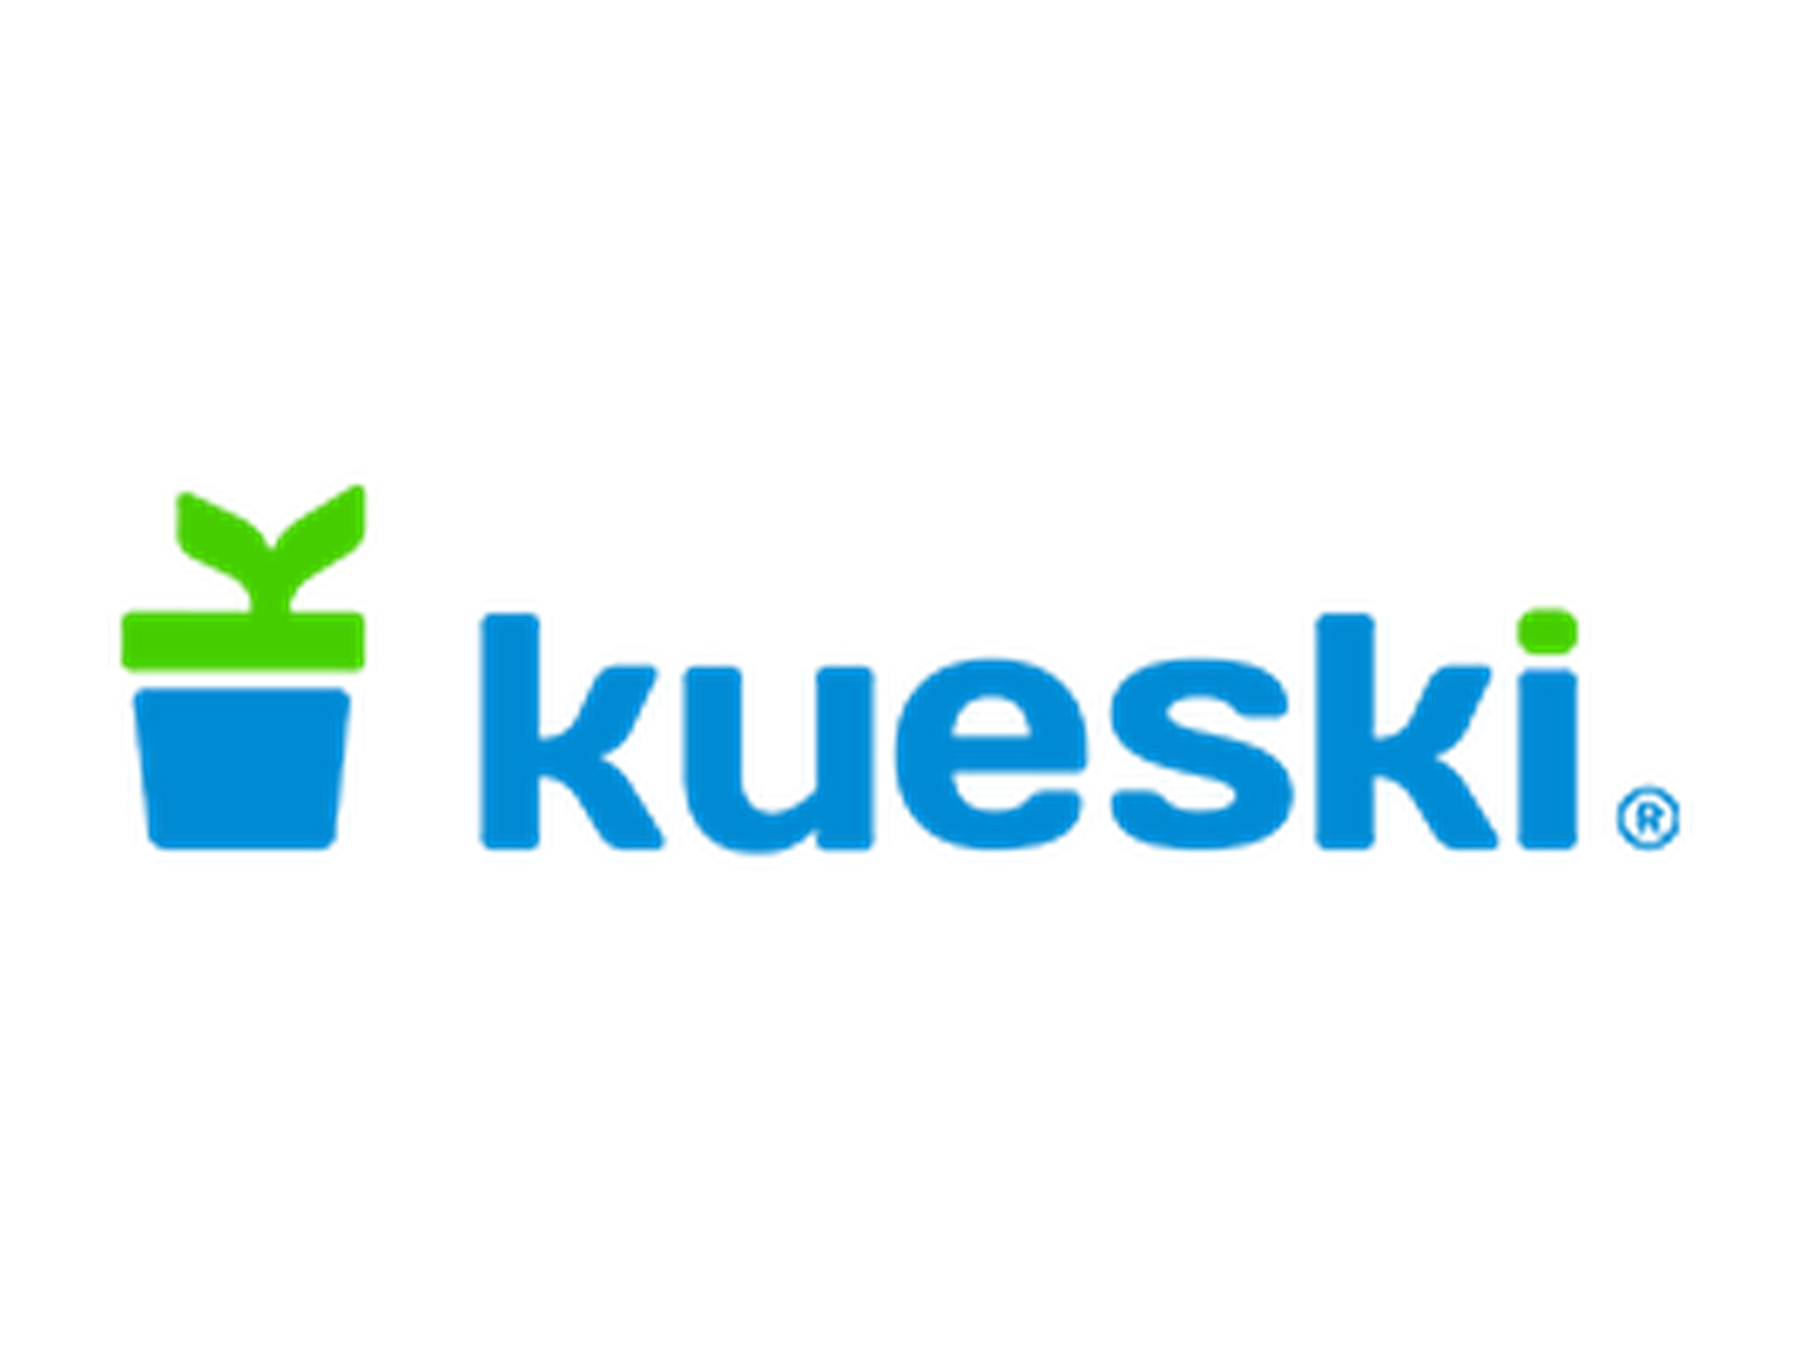 Cupón Kueski